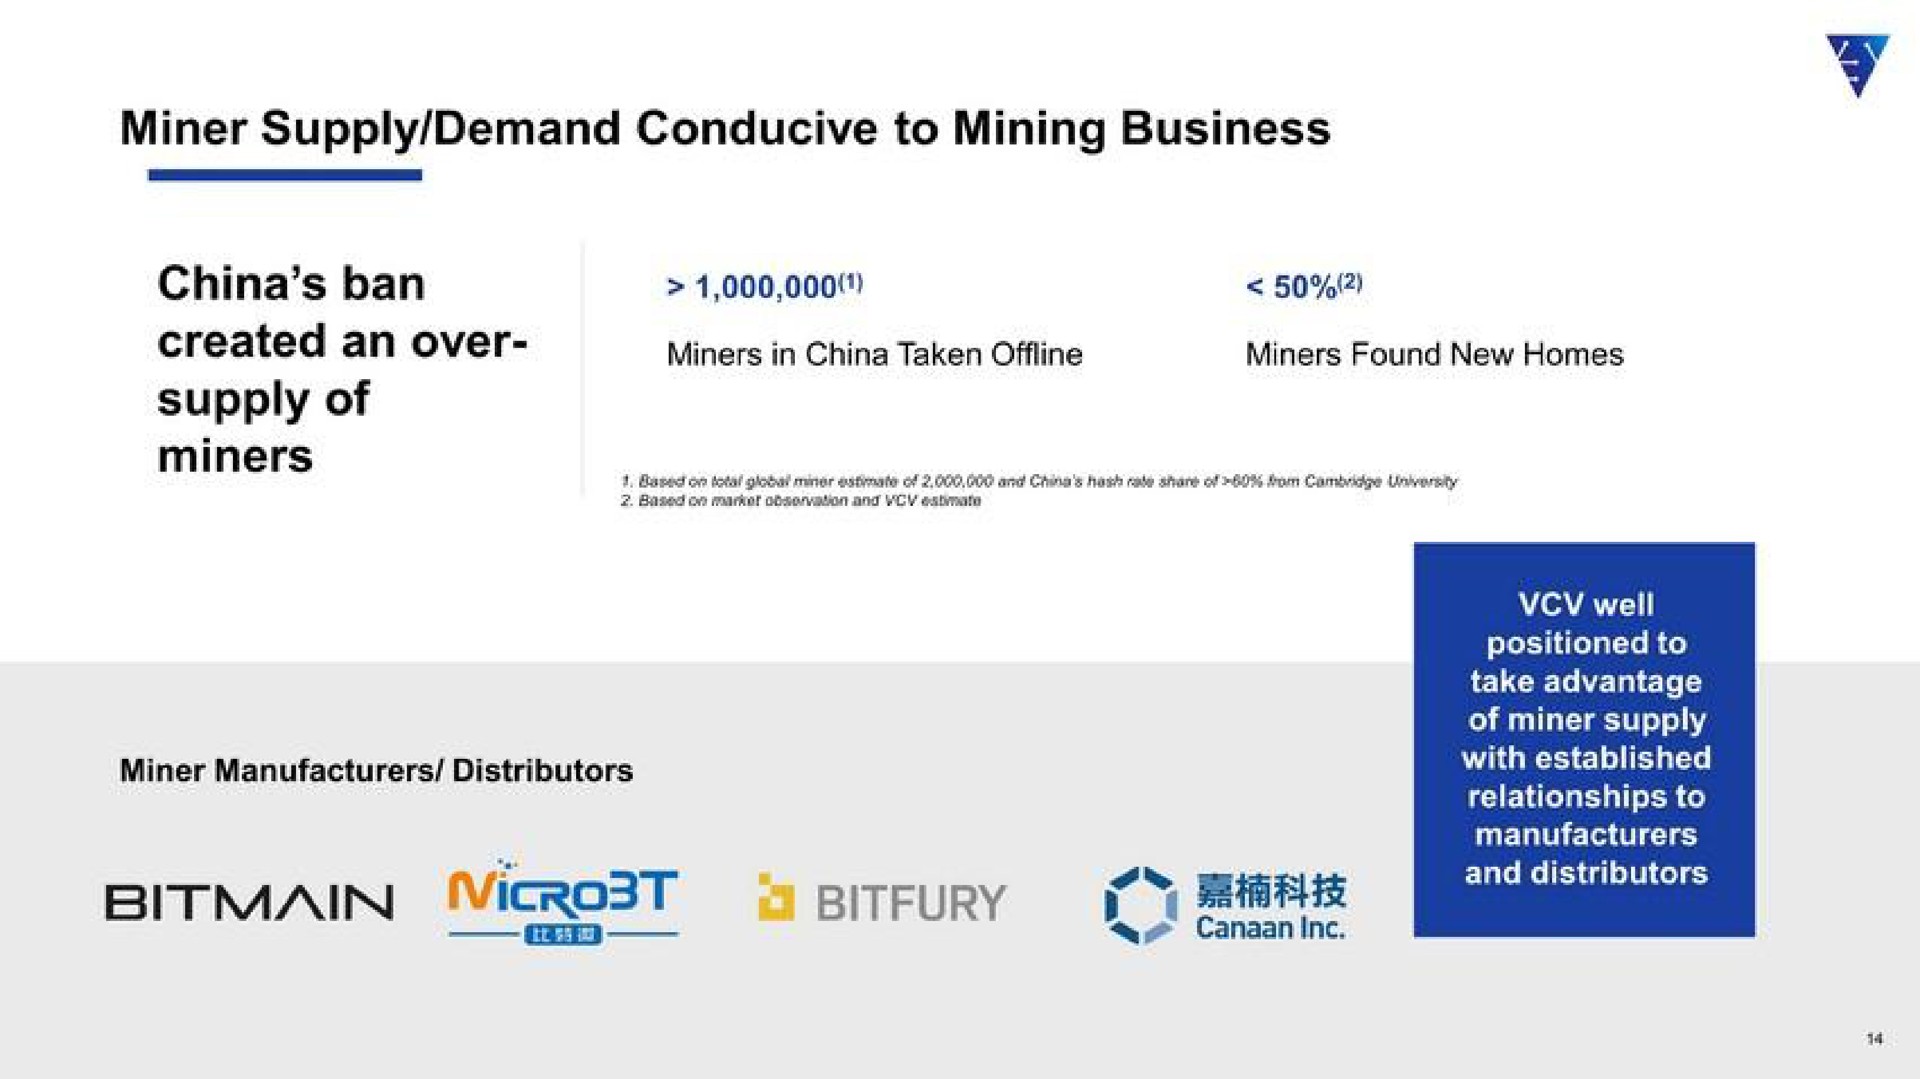 miner supply demand conducive to mining business mib | VCV Digital Technology